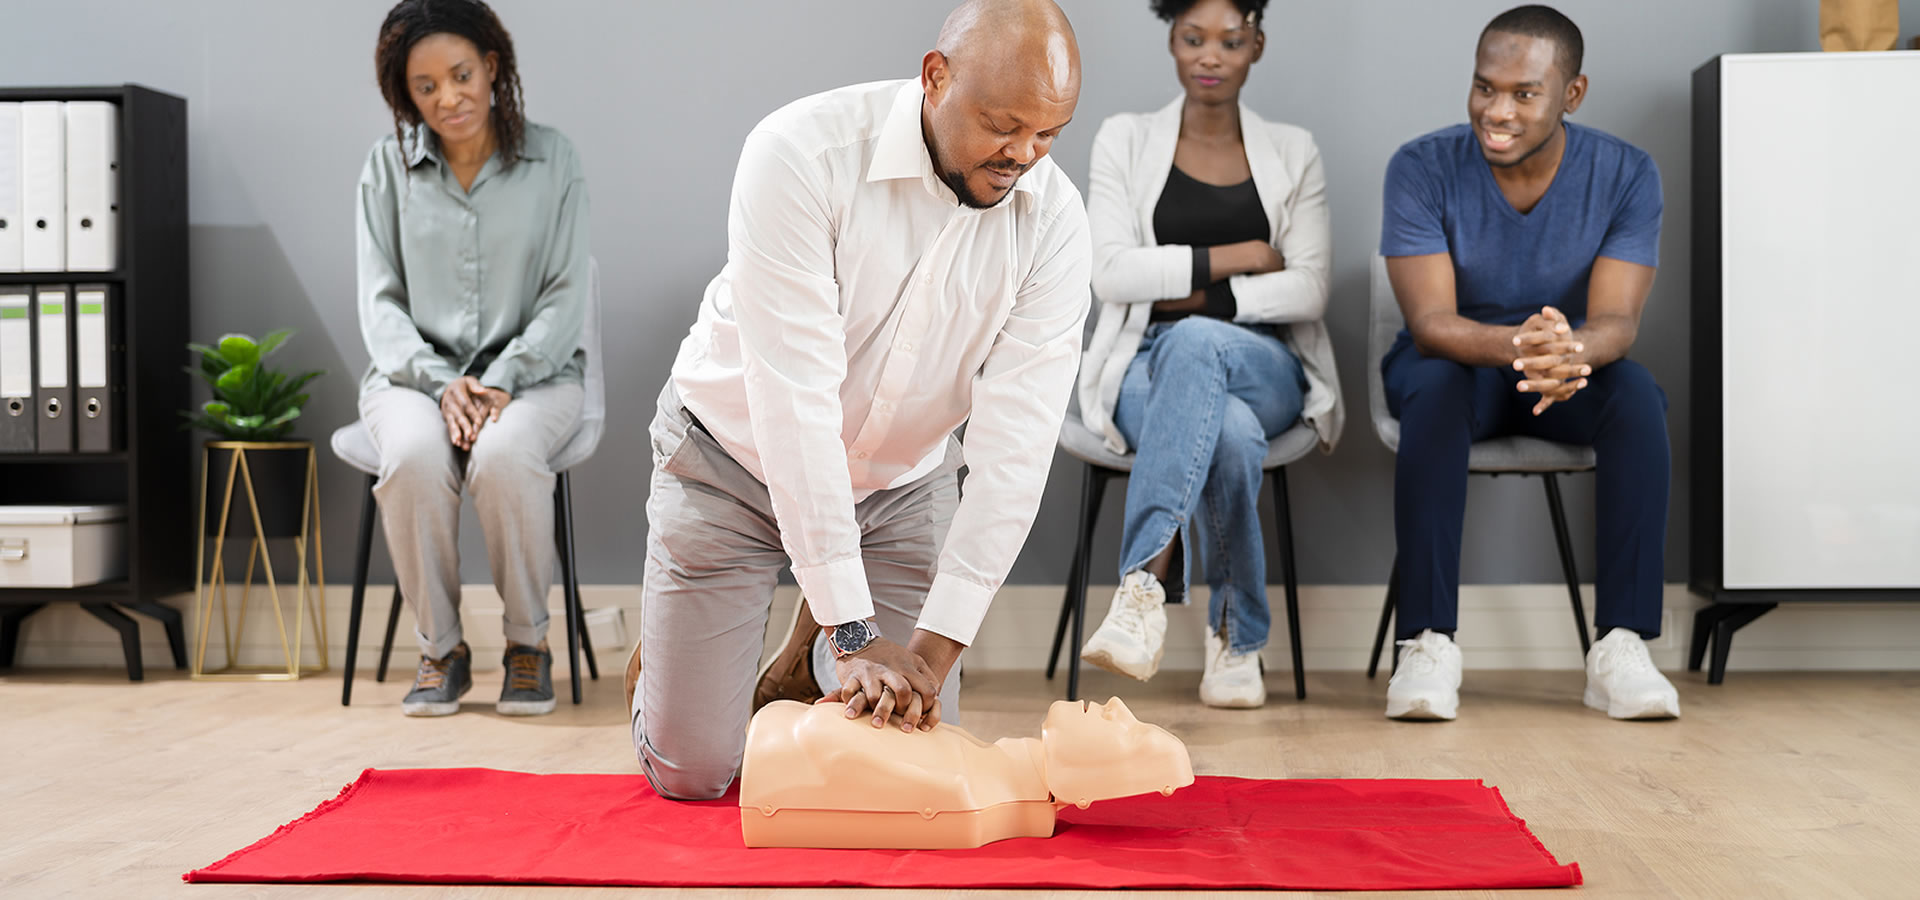 Top Ten Reasons To Be CPR Certified